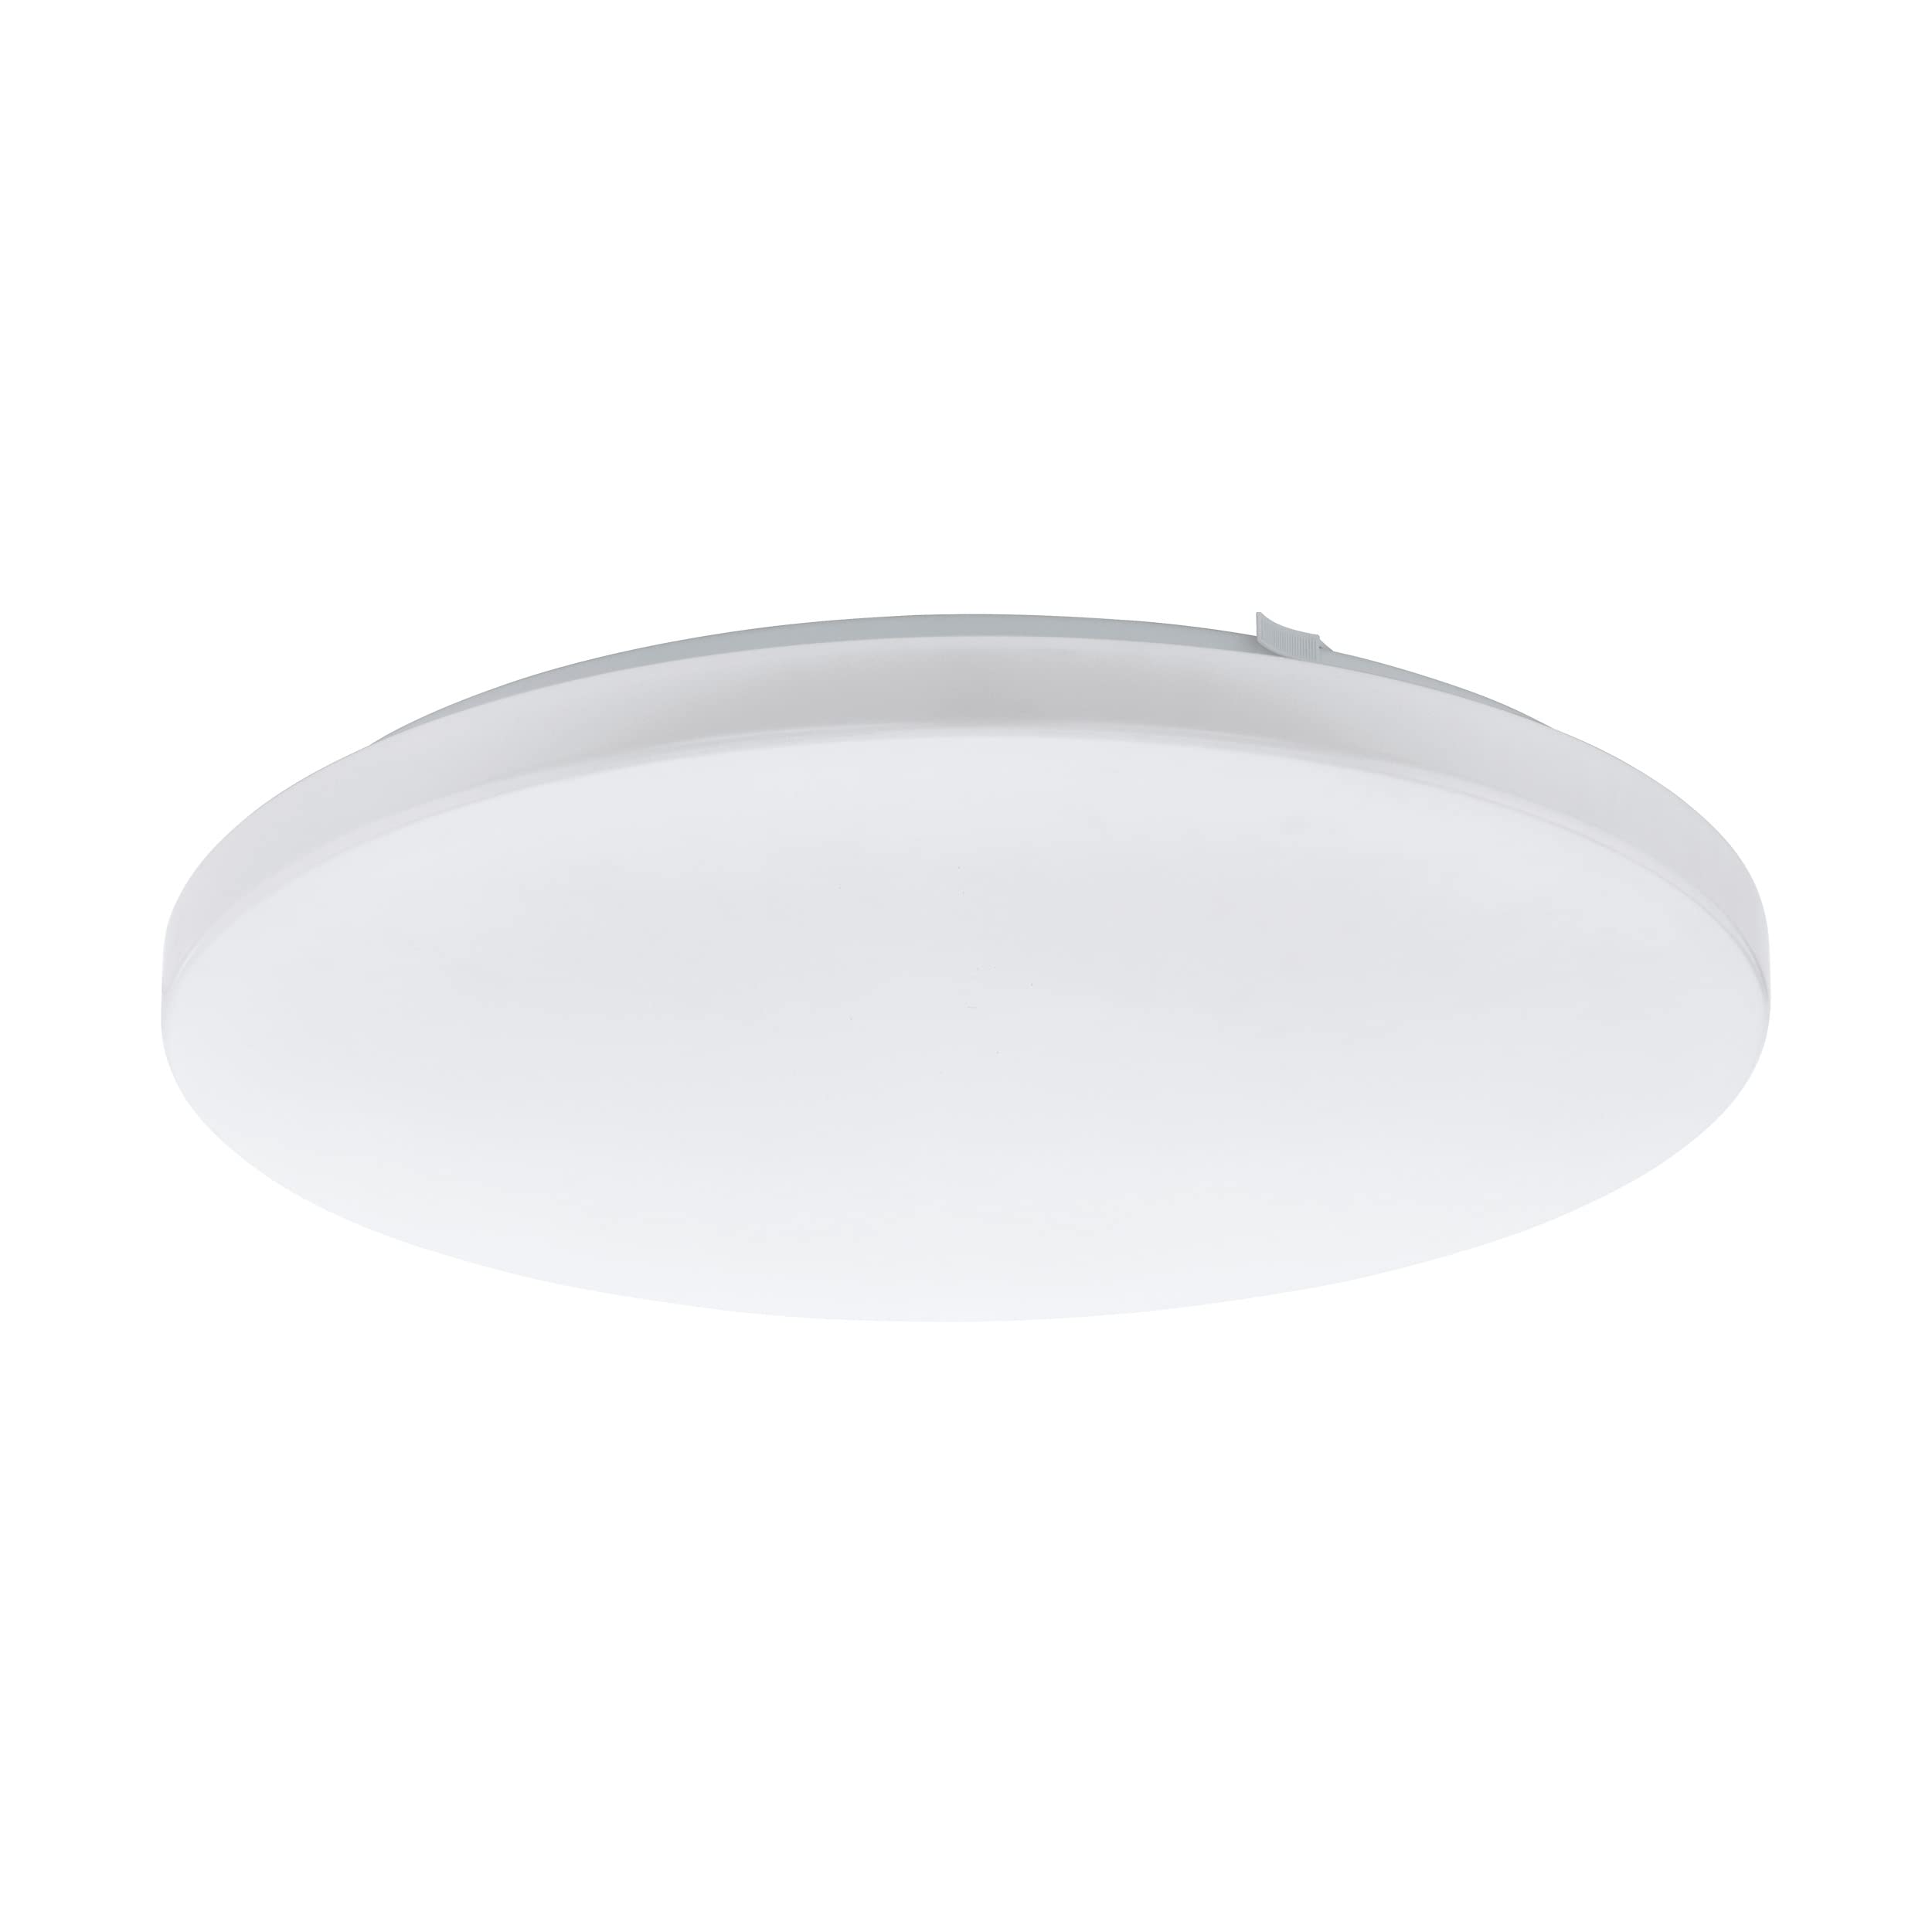 EGLO LED Deckenlampe Frania, 1 flammige Deckenleuchte, Material: Stahl, Kunststoff, Farbe: Weiß, Ø: 43 cm